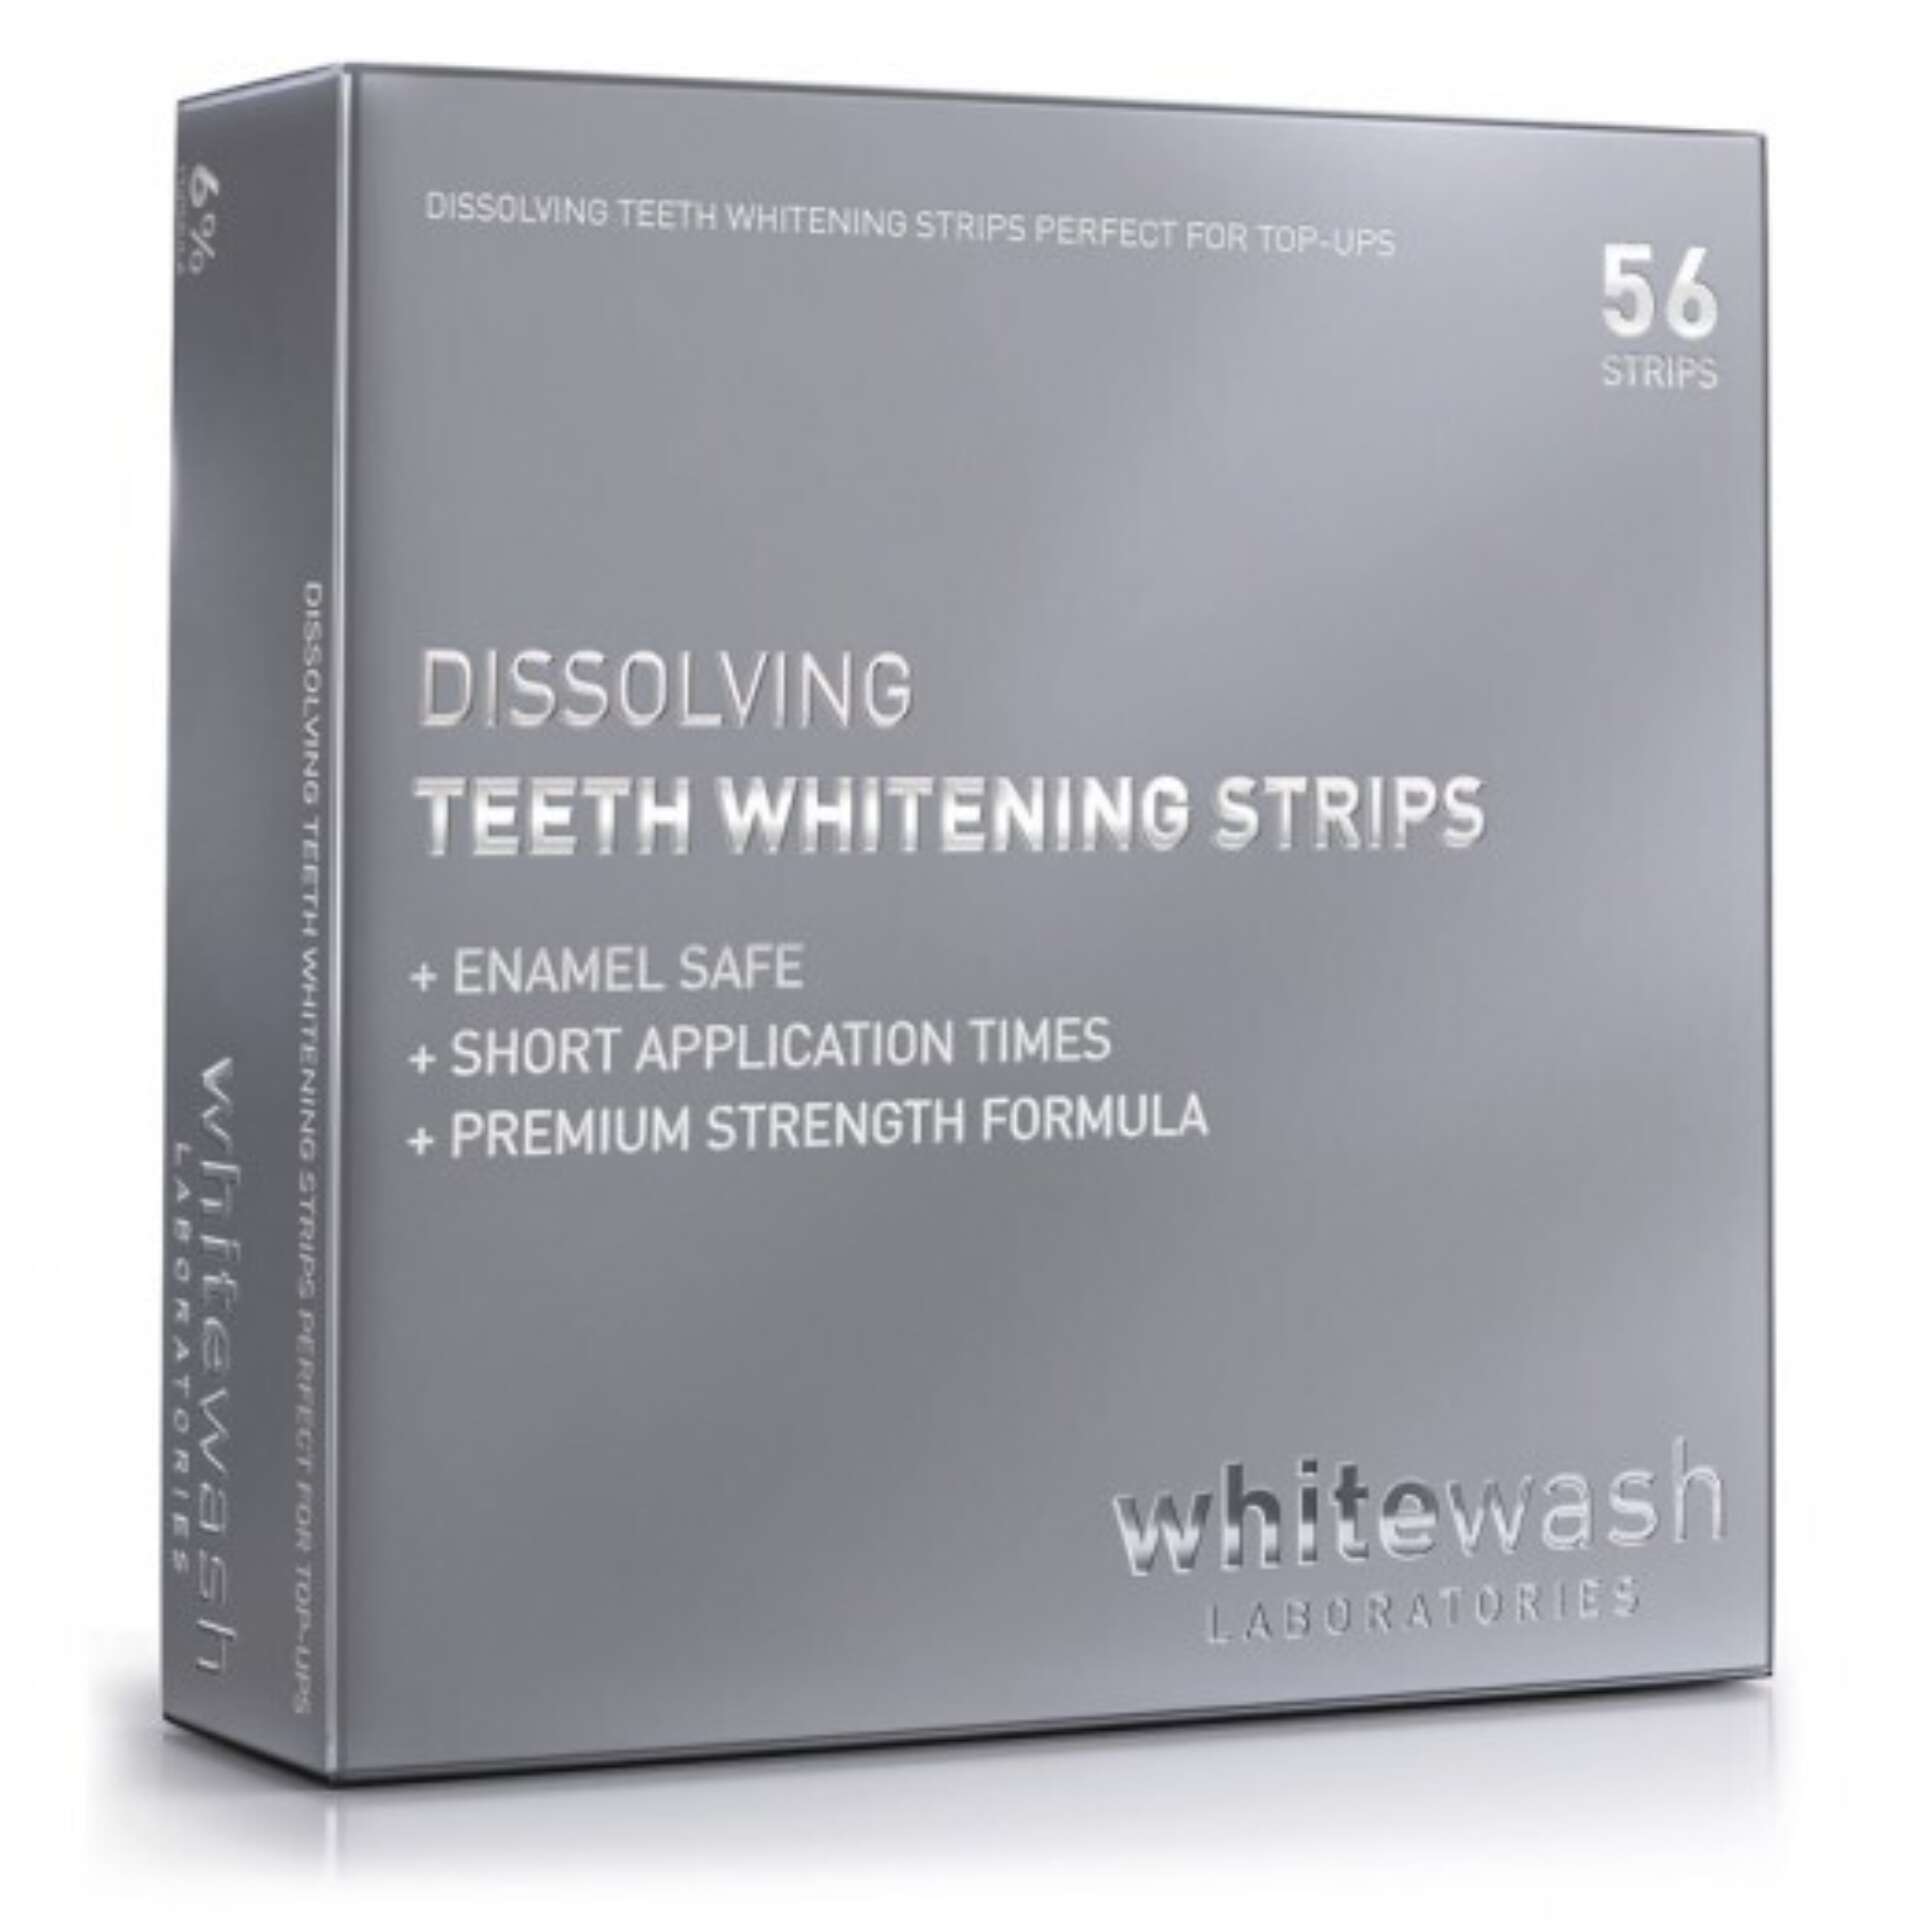 whitewash laboratories teeth whitening strips